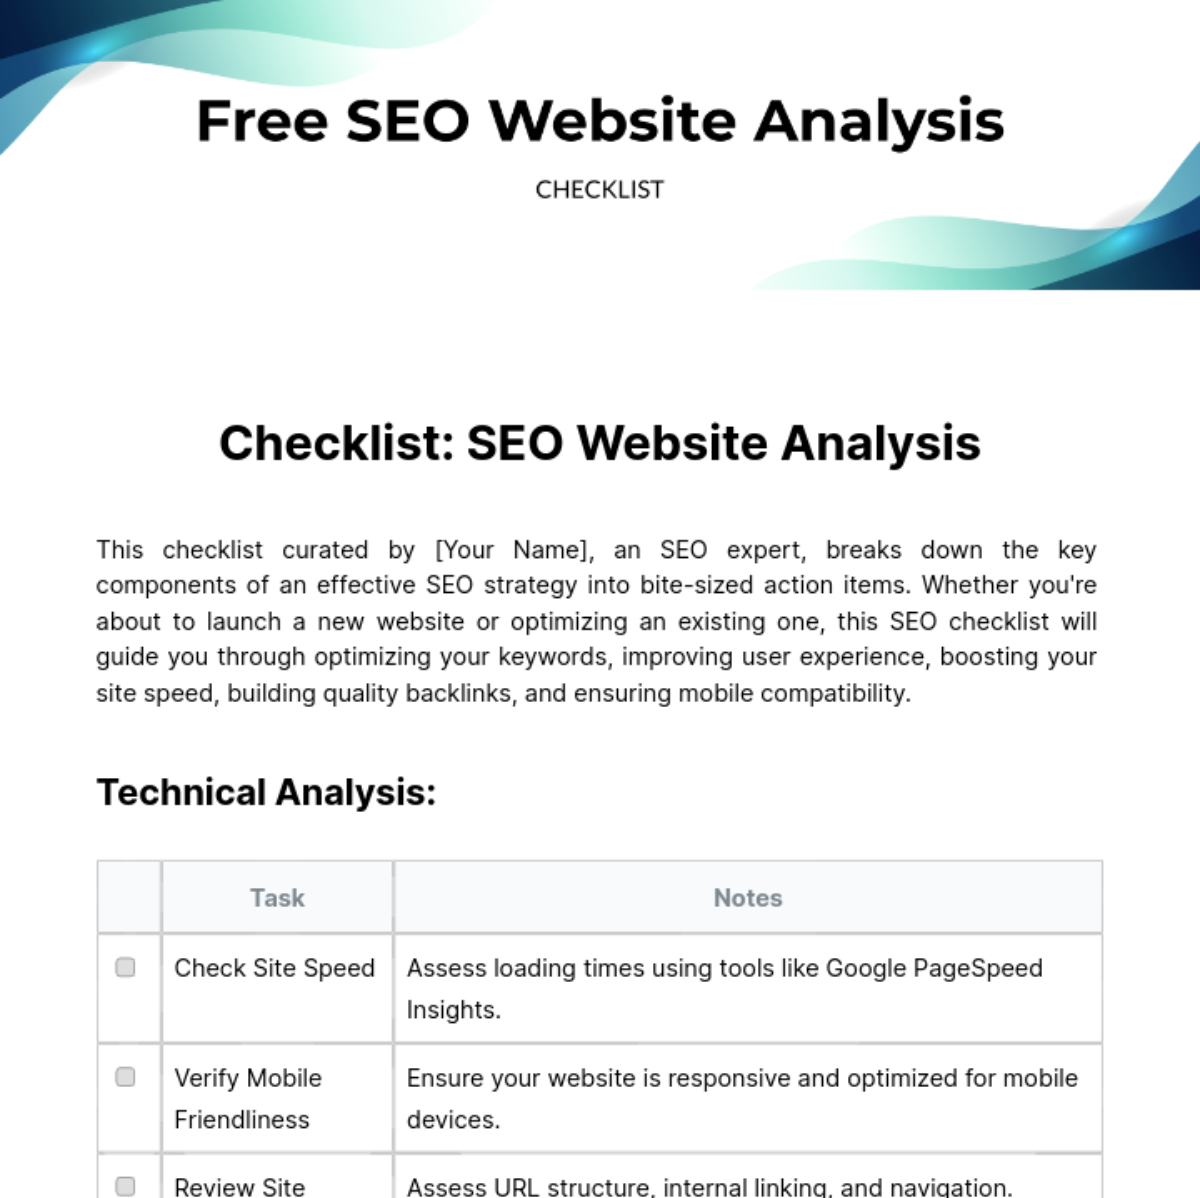 SEO Website Analysis Checklist Template